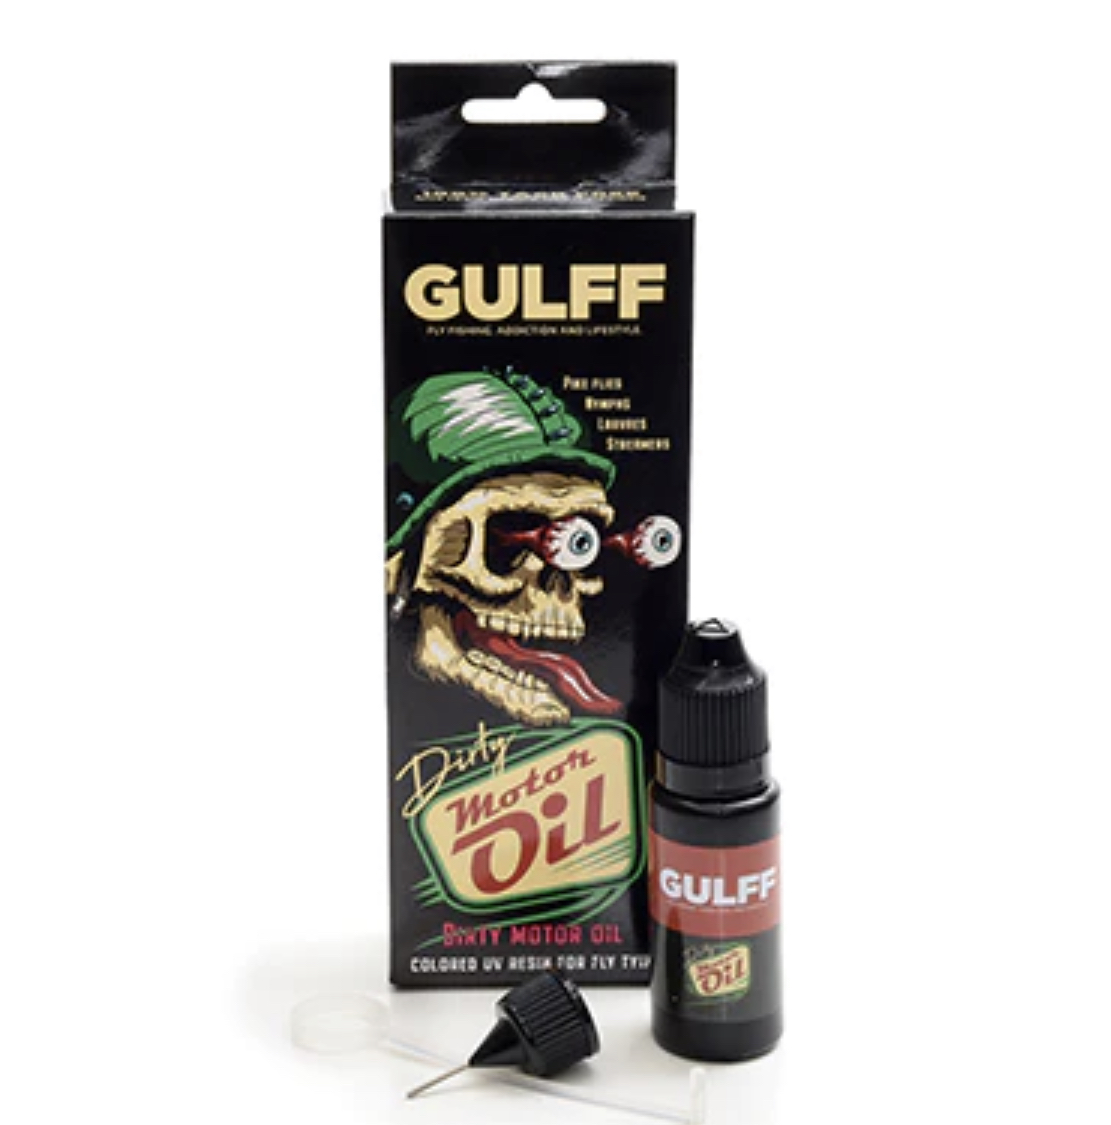 Gulff Dirty Motor Oil